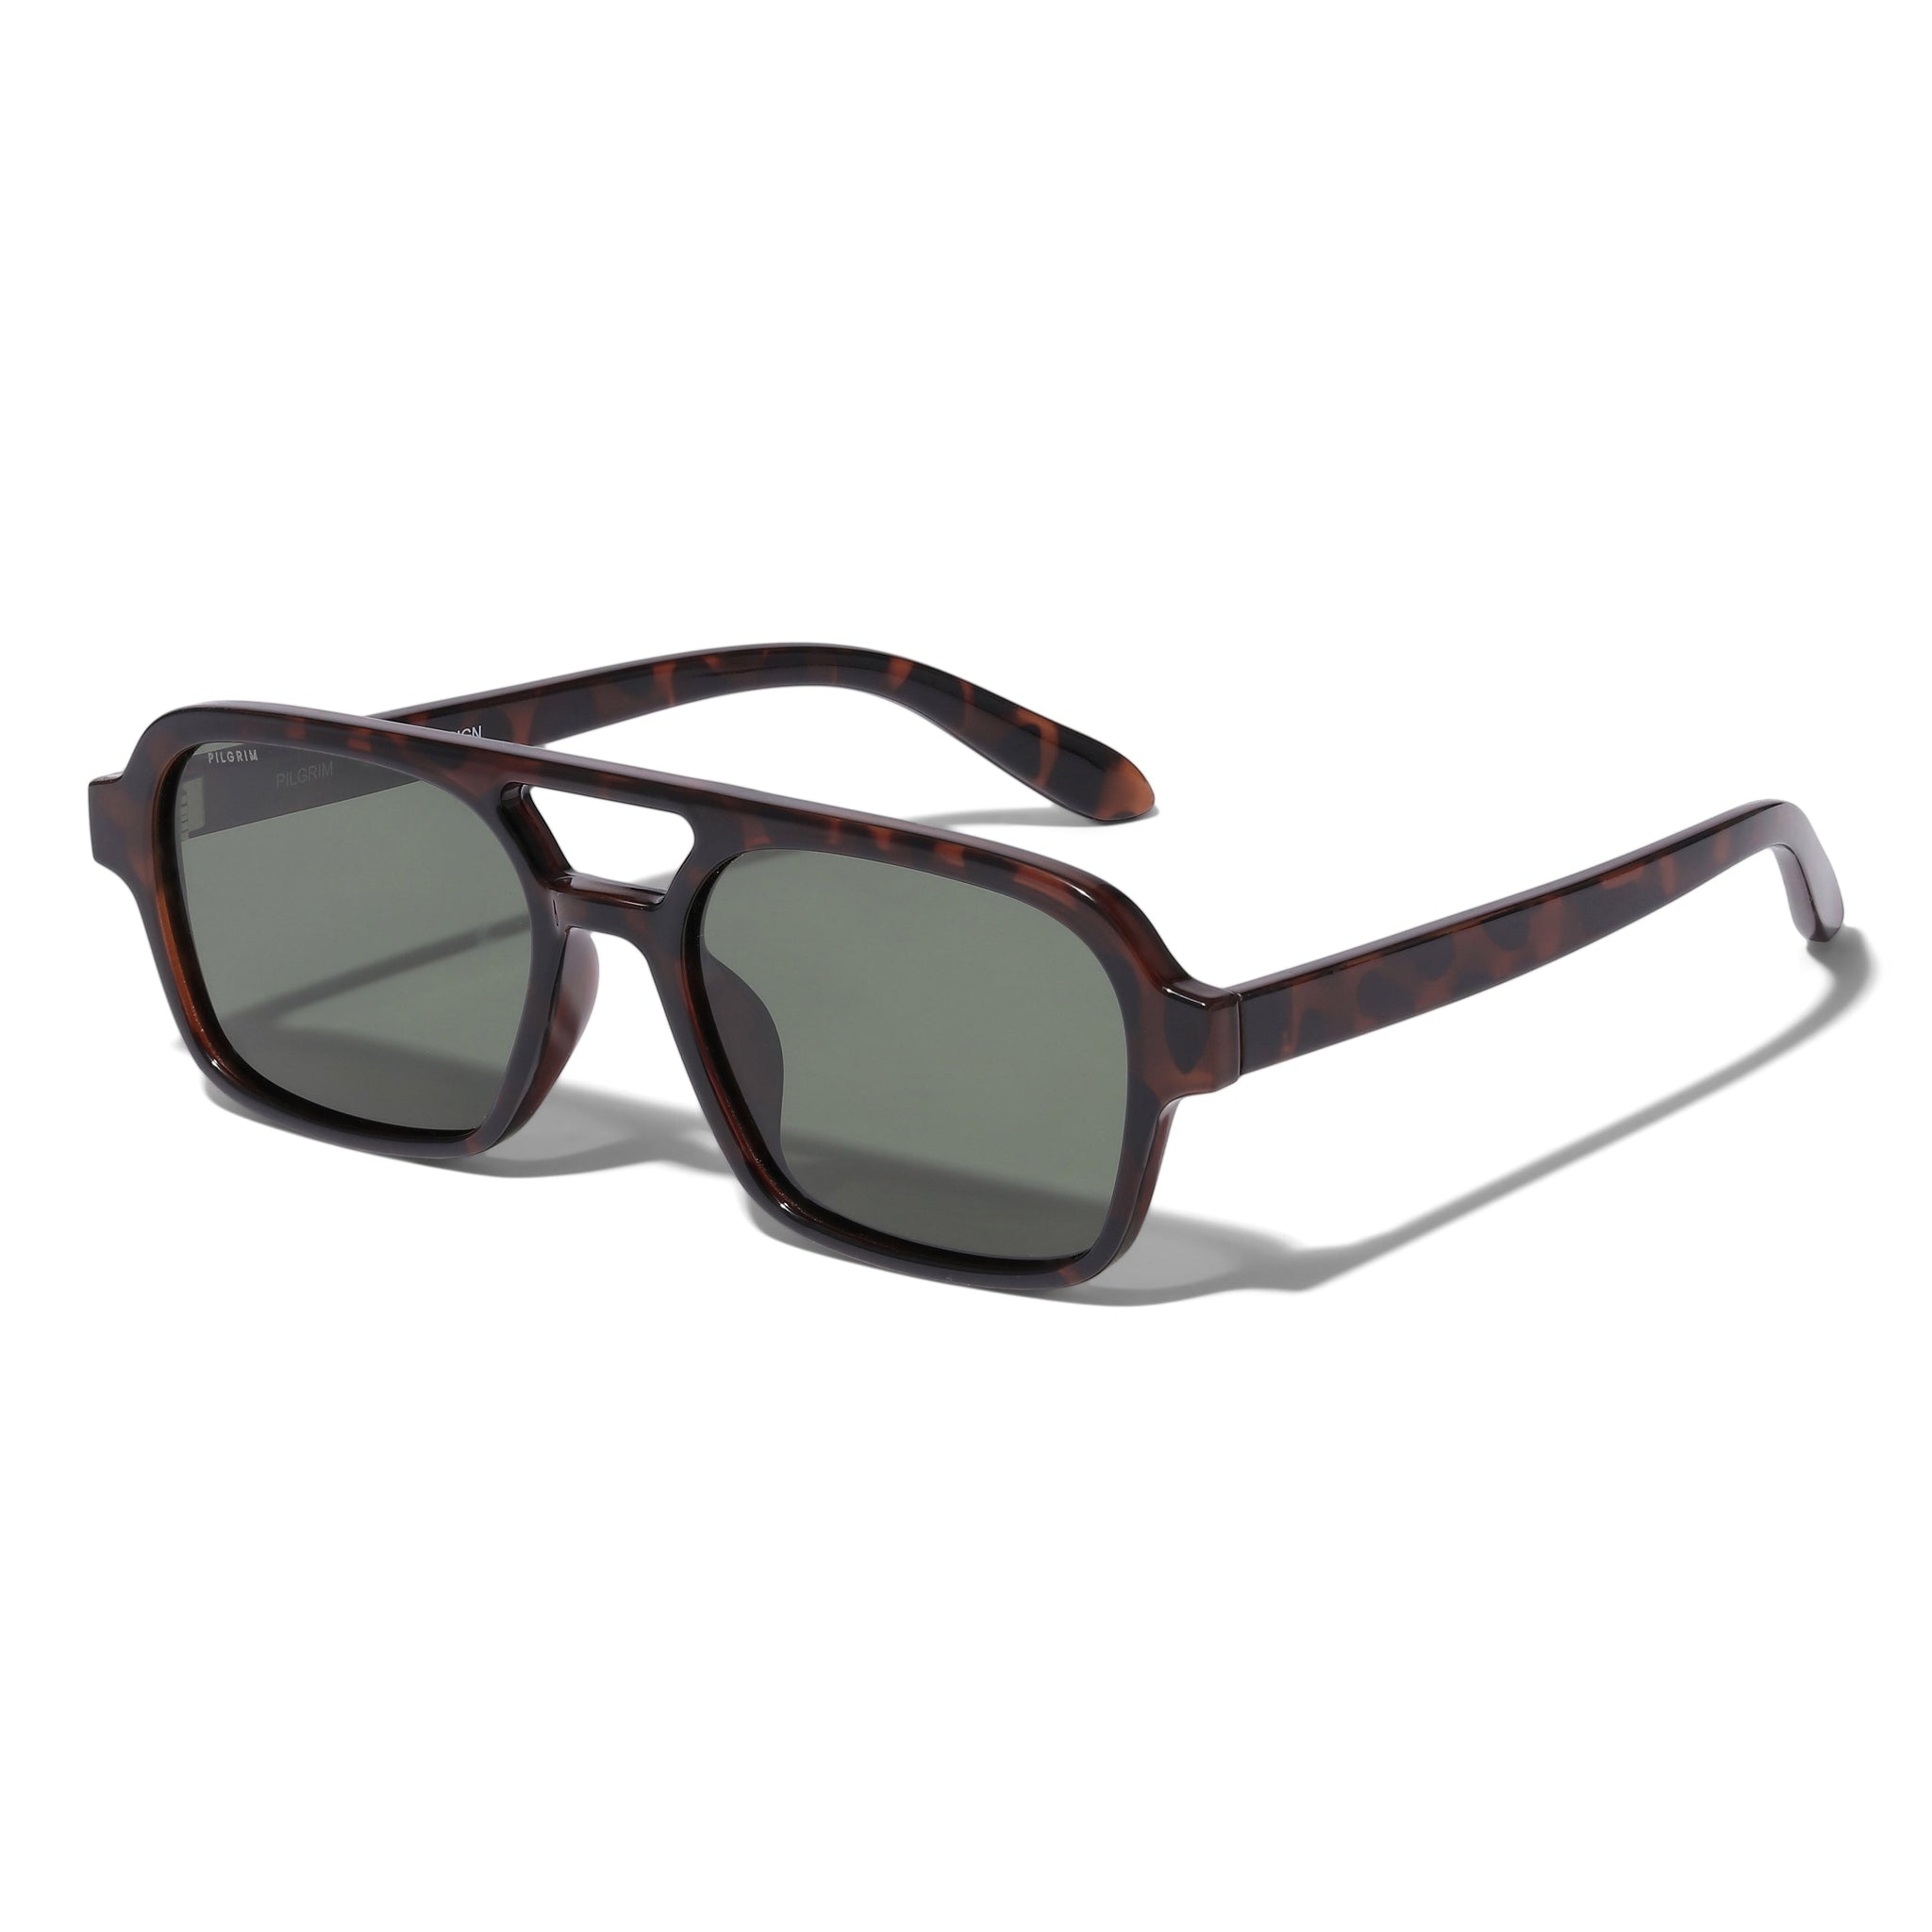 Cass Recycled Retro Style Sunglasses - Brown Tortoise - Pilgrim